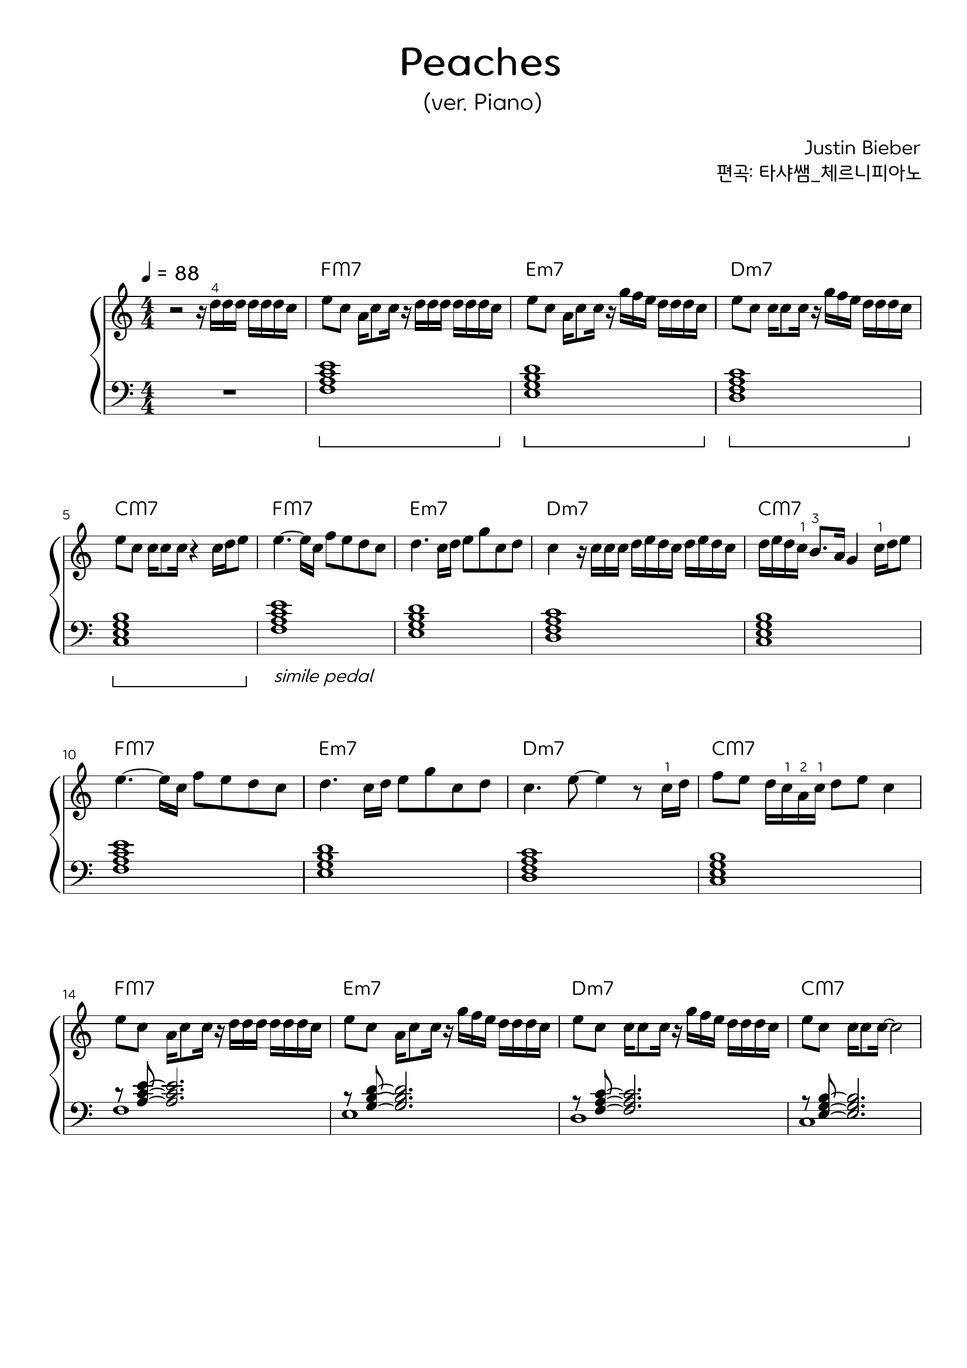 PEACHES – JUSTIN BIEBER PIANO CHORDS & Lyrics – Bitesize Piano